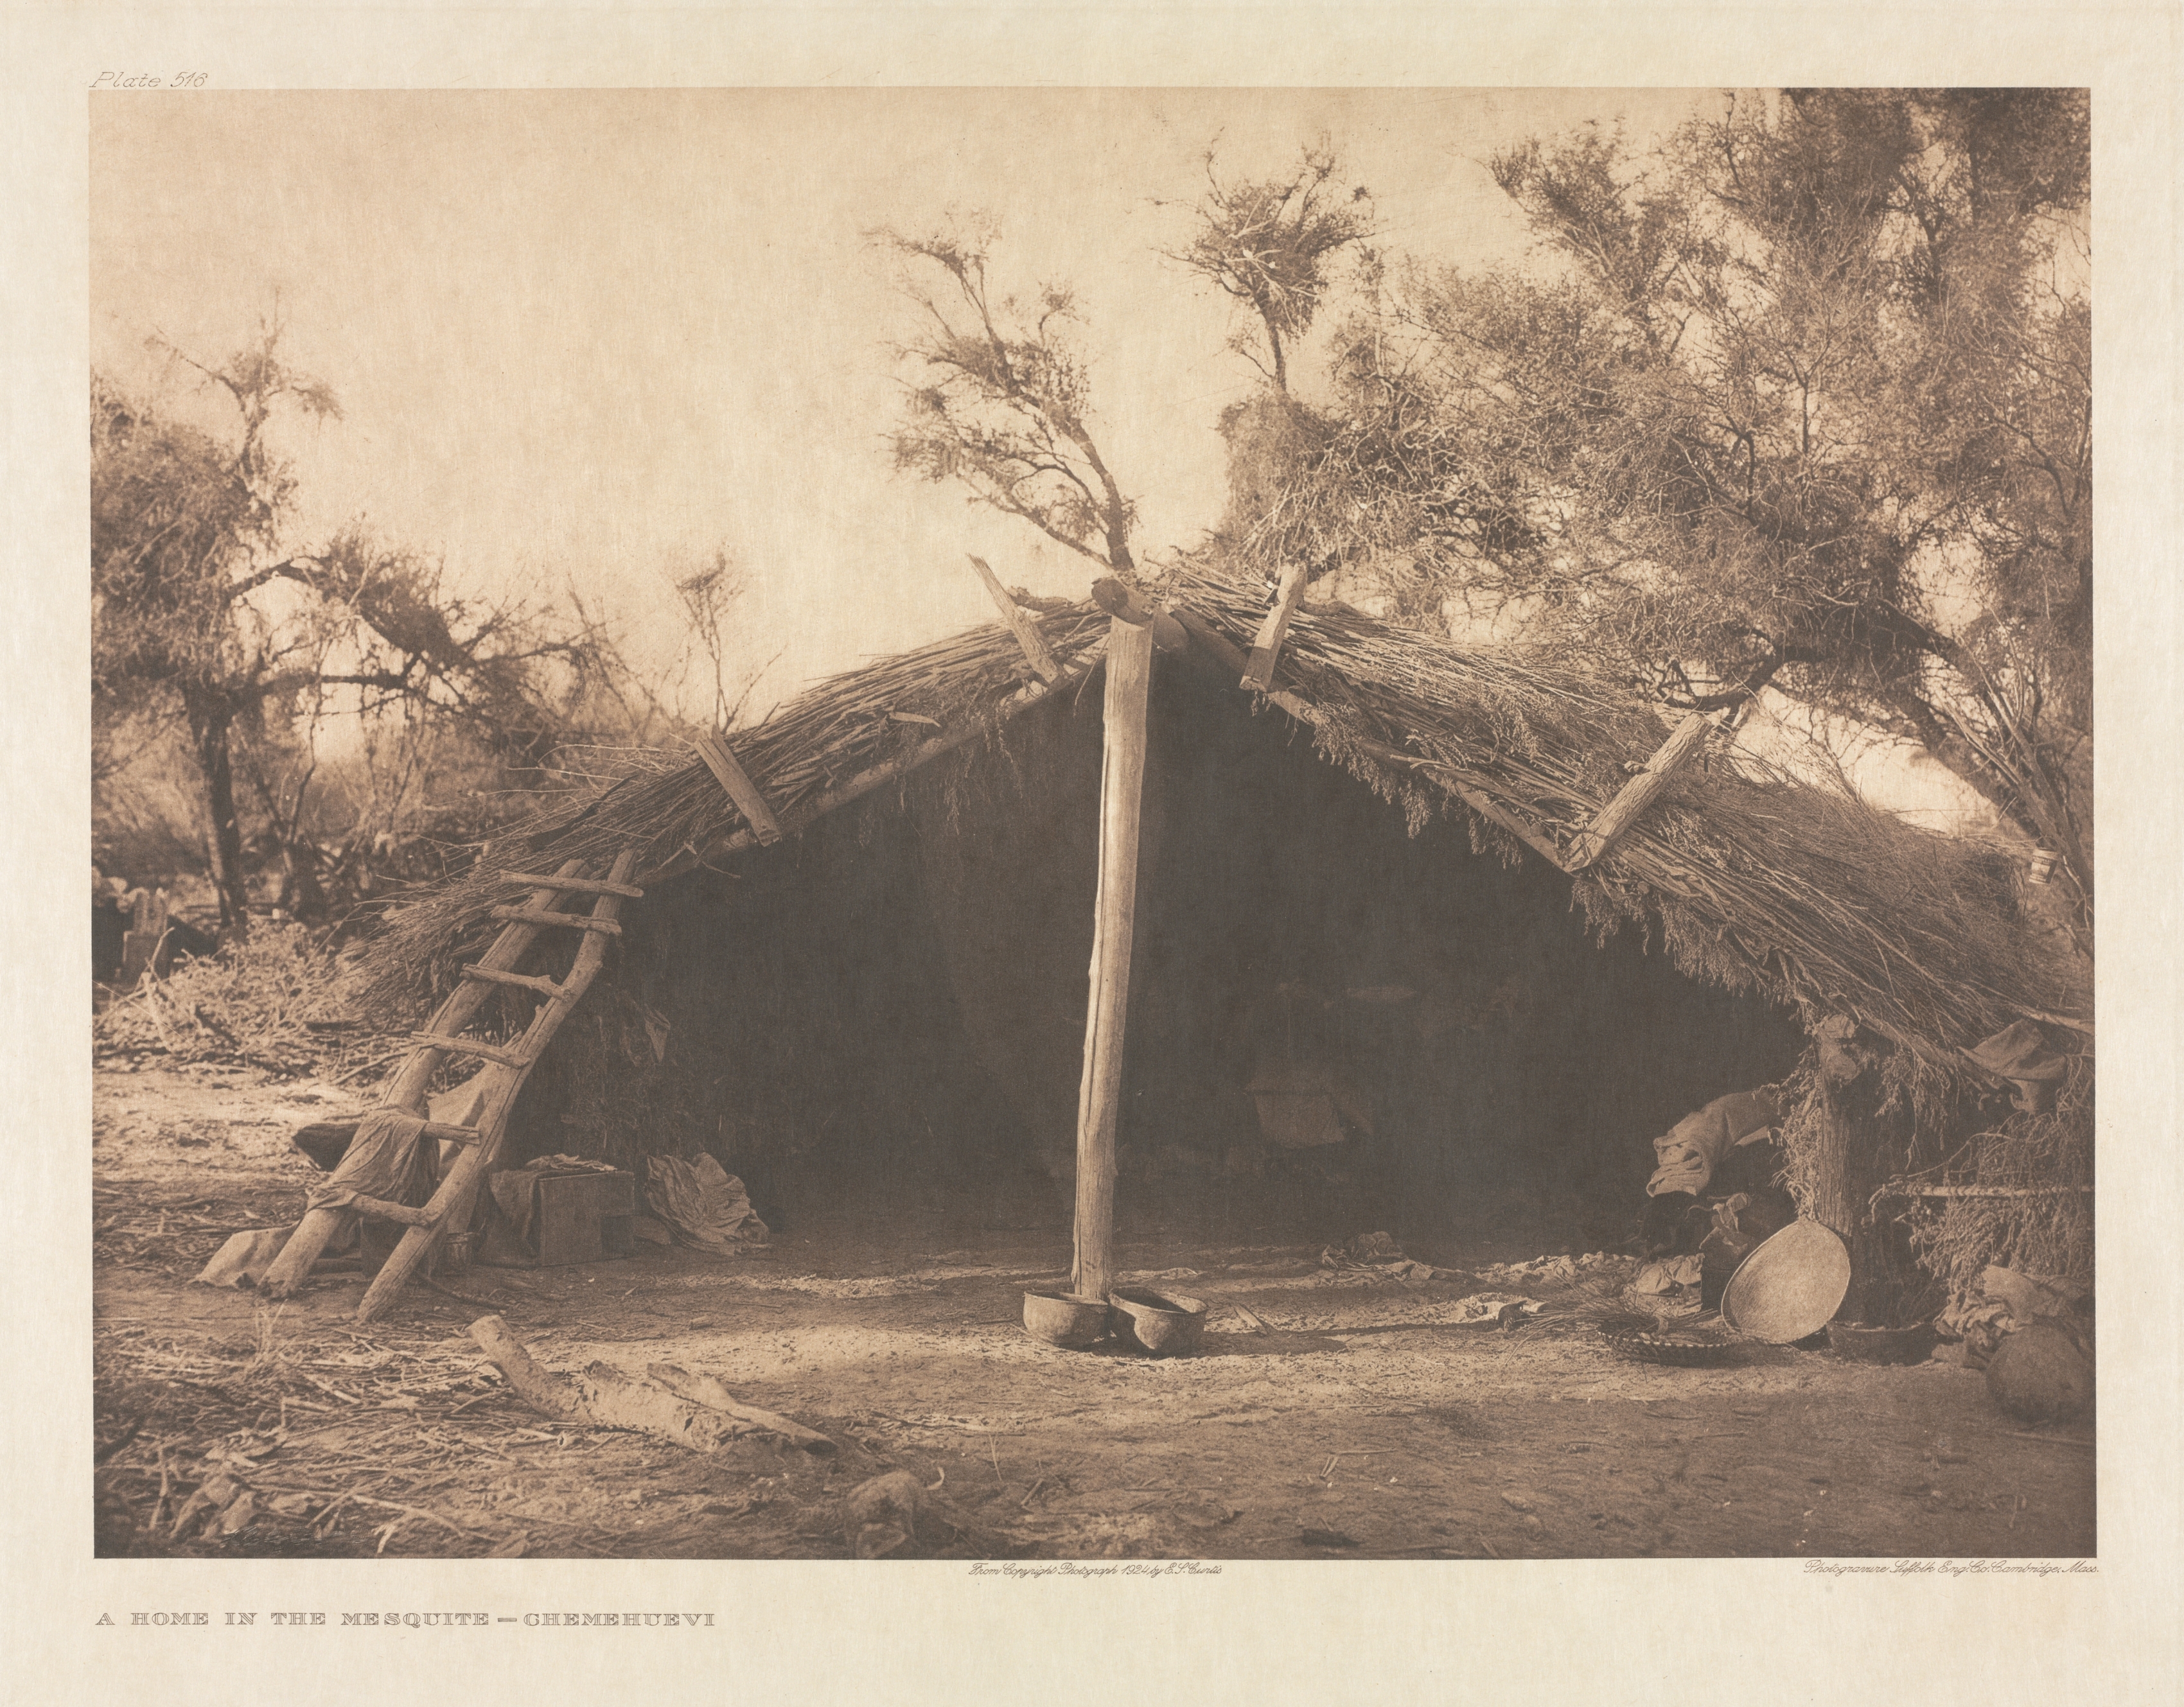 Portfolio XV, Plate 516: A Home in the Mesquite - Chemehuevi